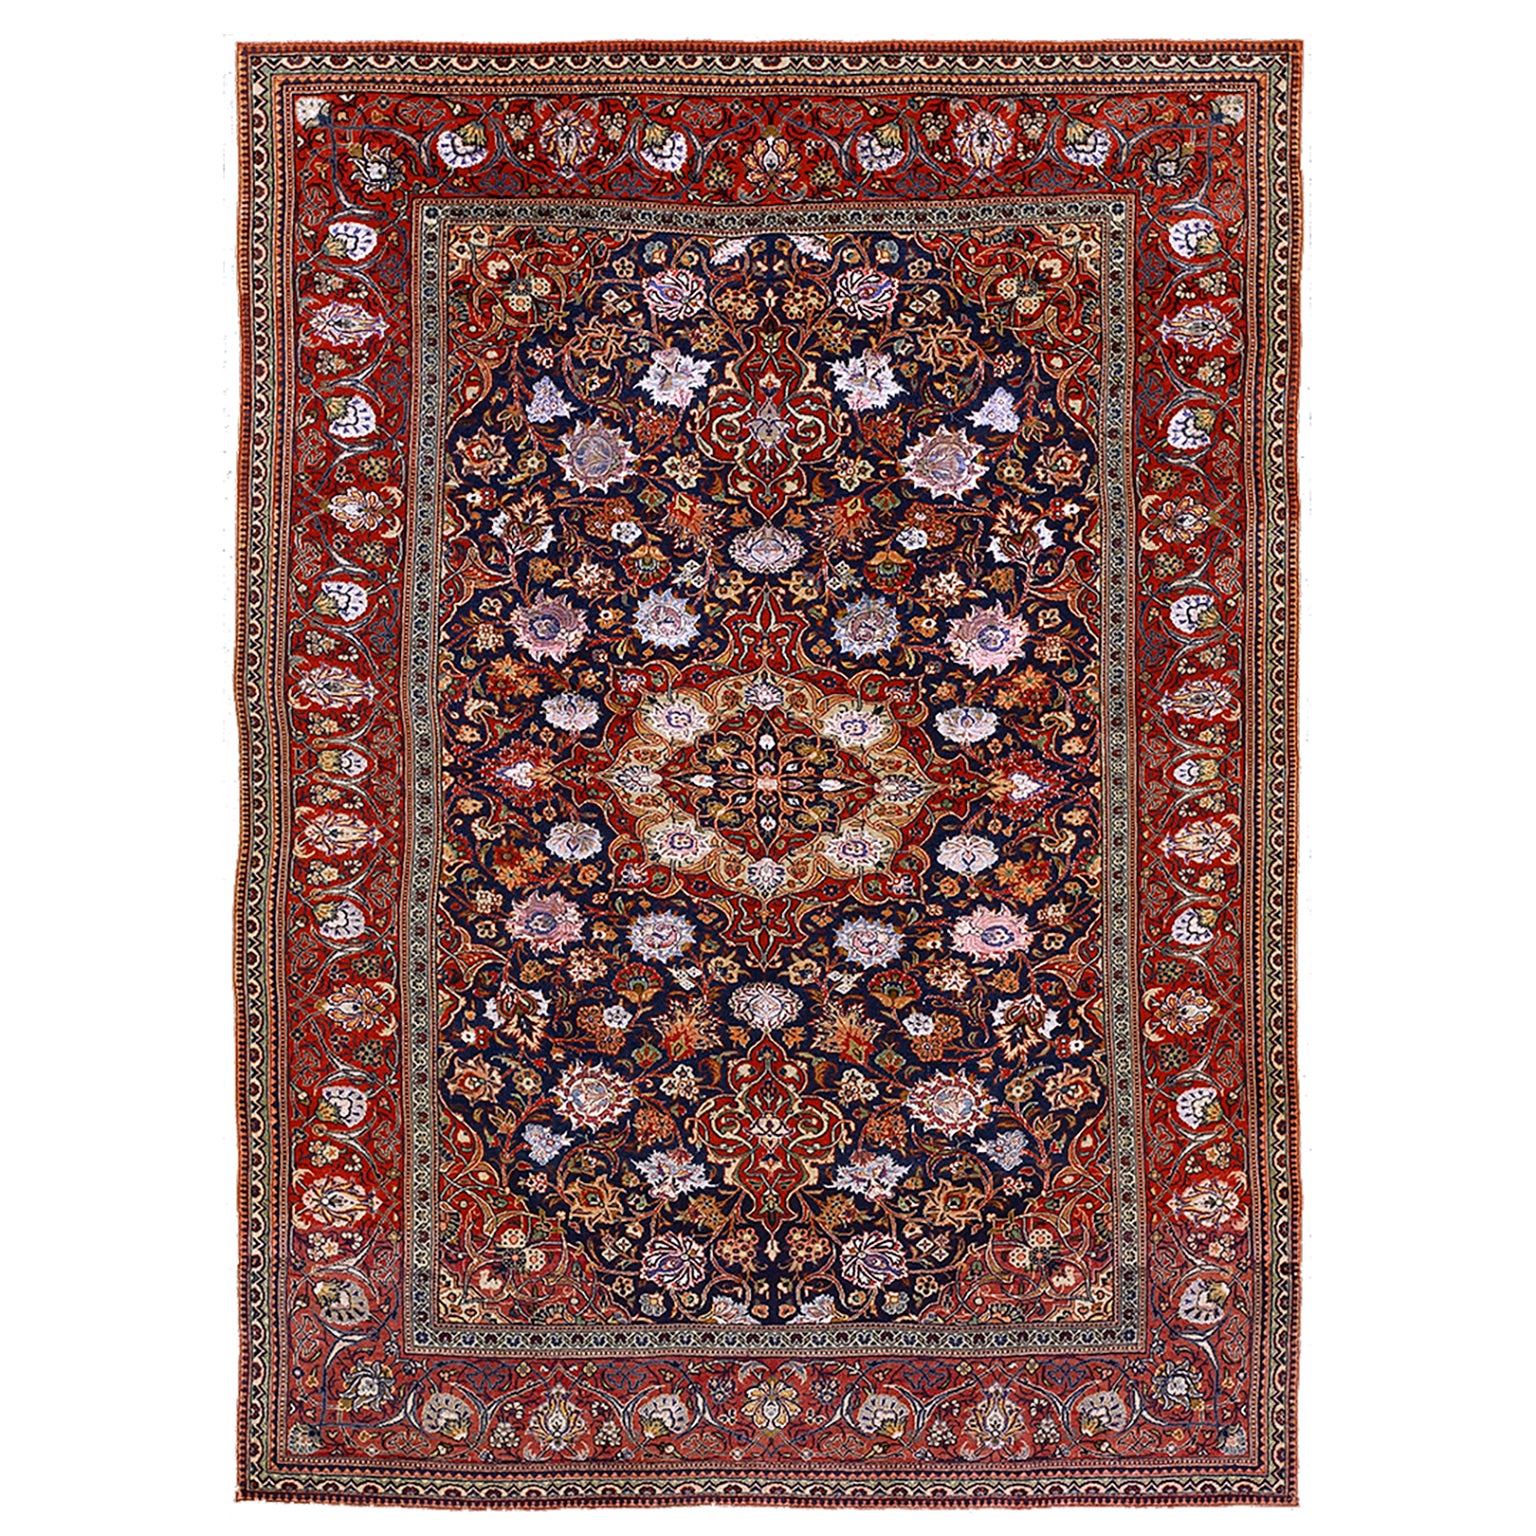 Early 20th Century Persian Silk & Wool Kashan Carpet ( 4'4" x 6'6' - 132 x 198 )